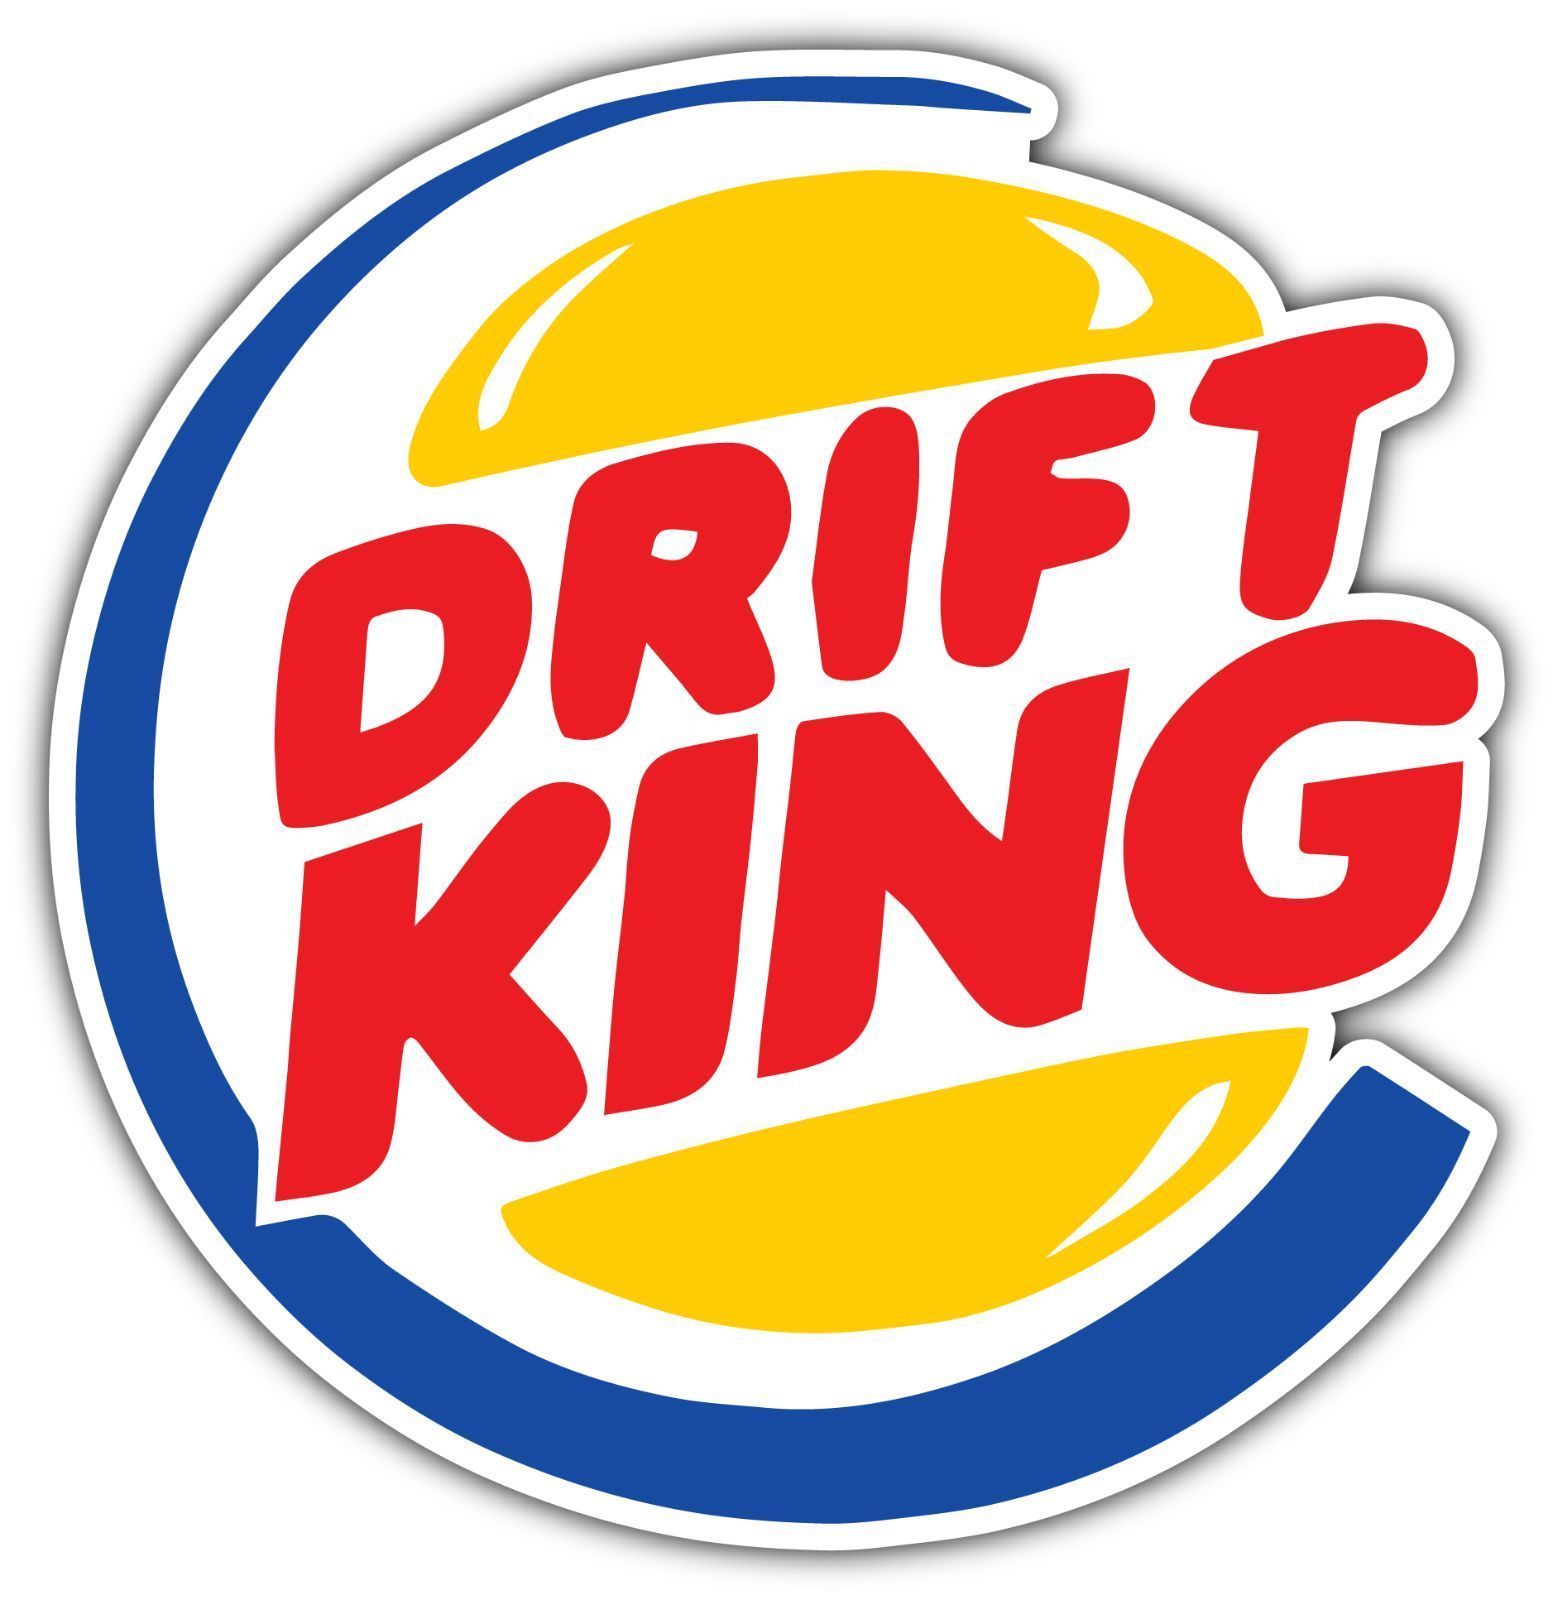 11 diet Logo fast foods ideas